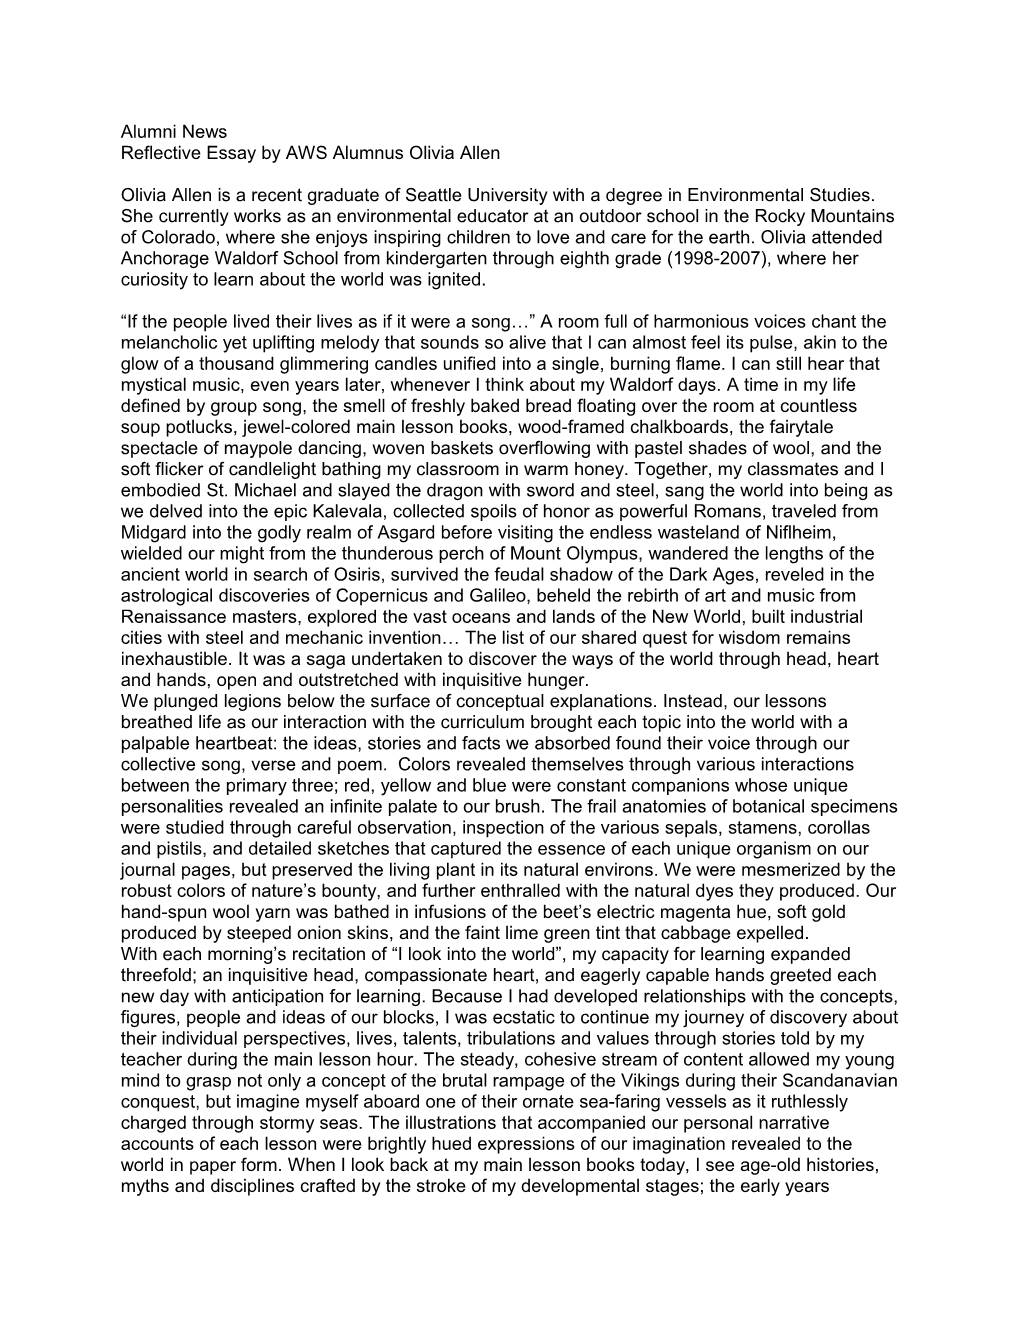 Reflective Essay by AWS Alumnus Olivia Allen